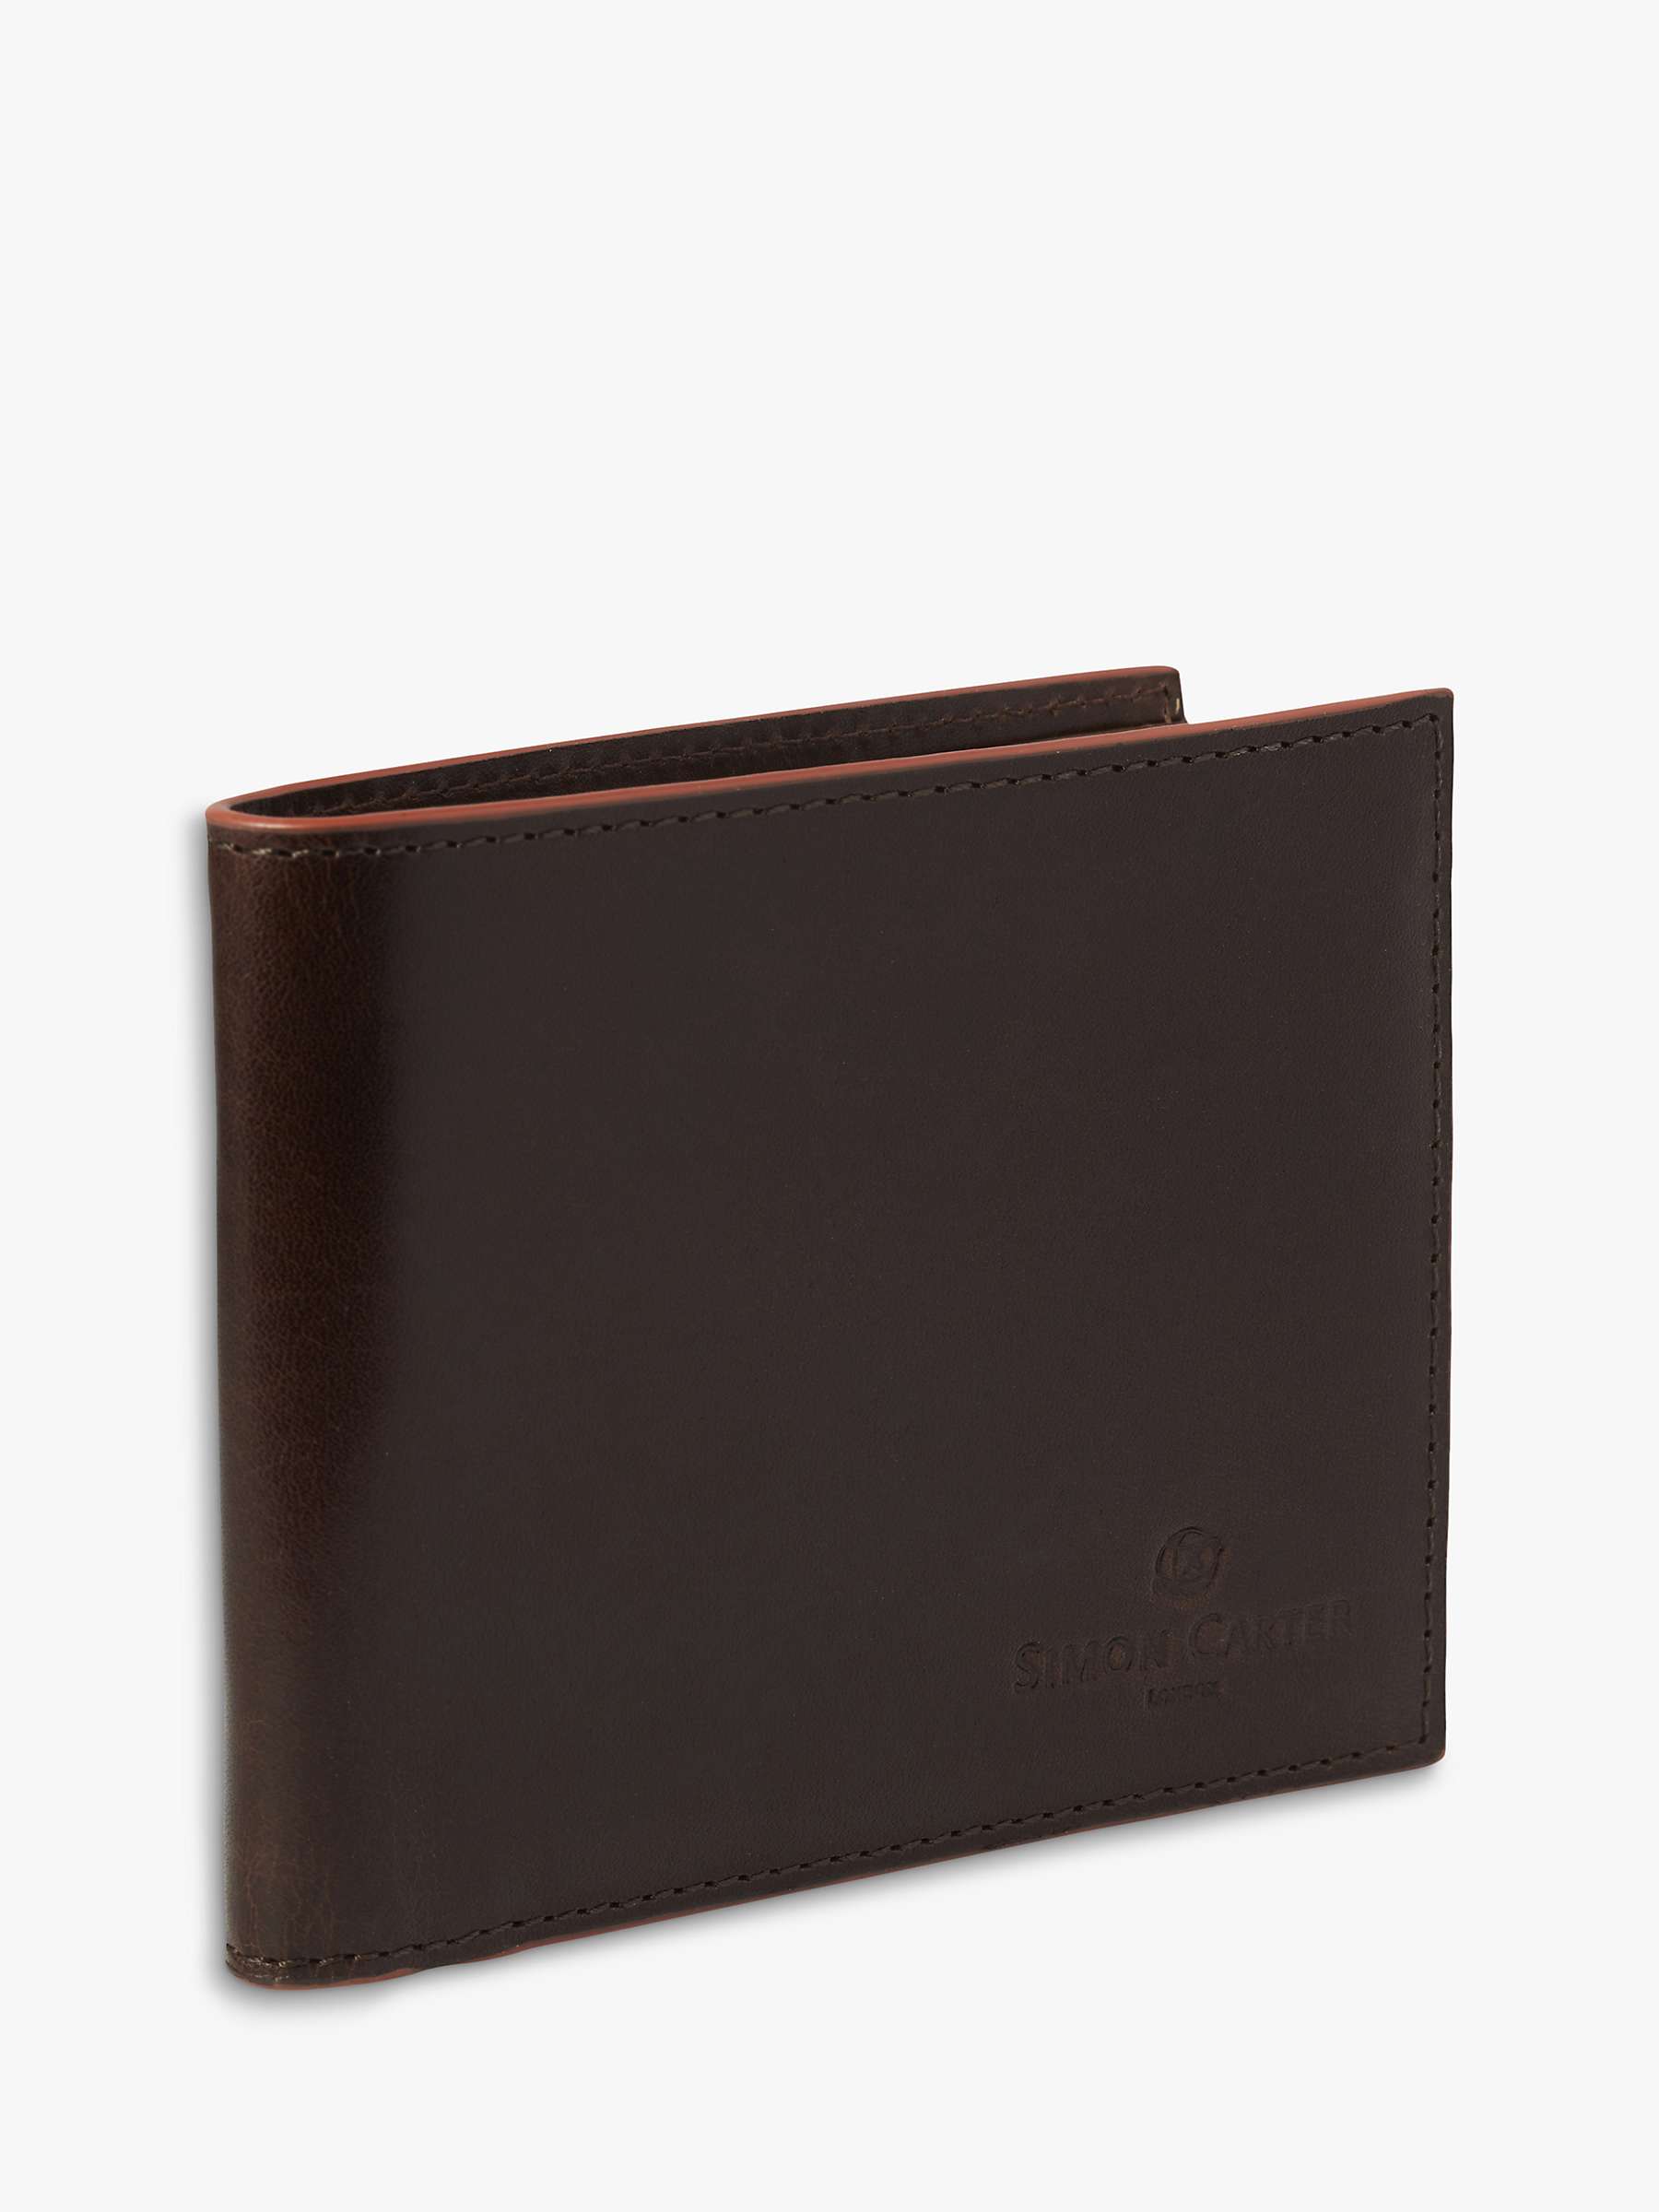 Simon Carter Edge Leather Wallet, Brown/Cinnamon at John Lewis & Partners